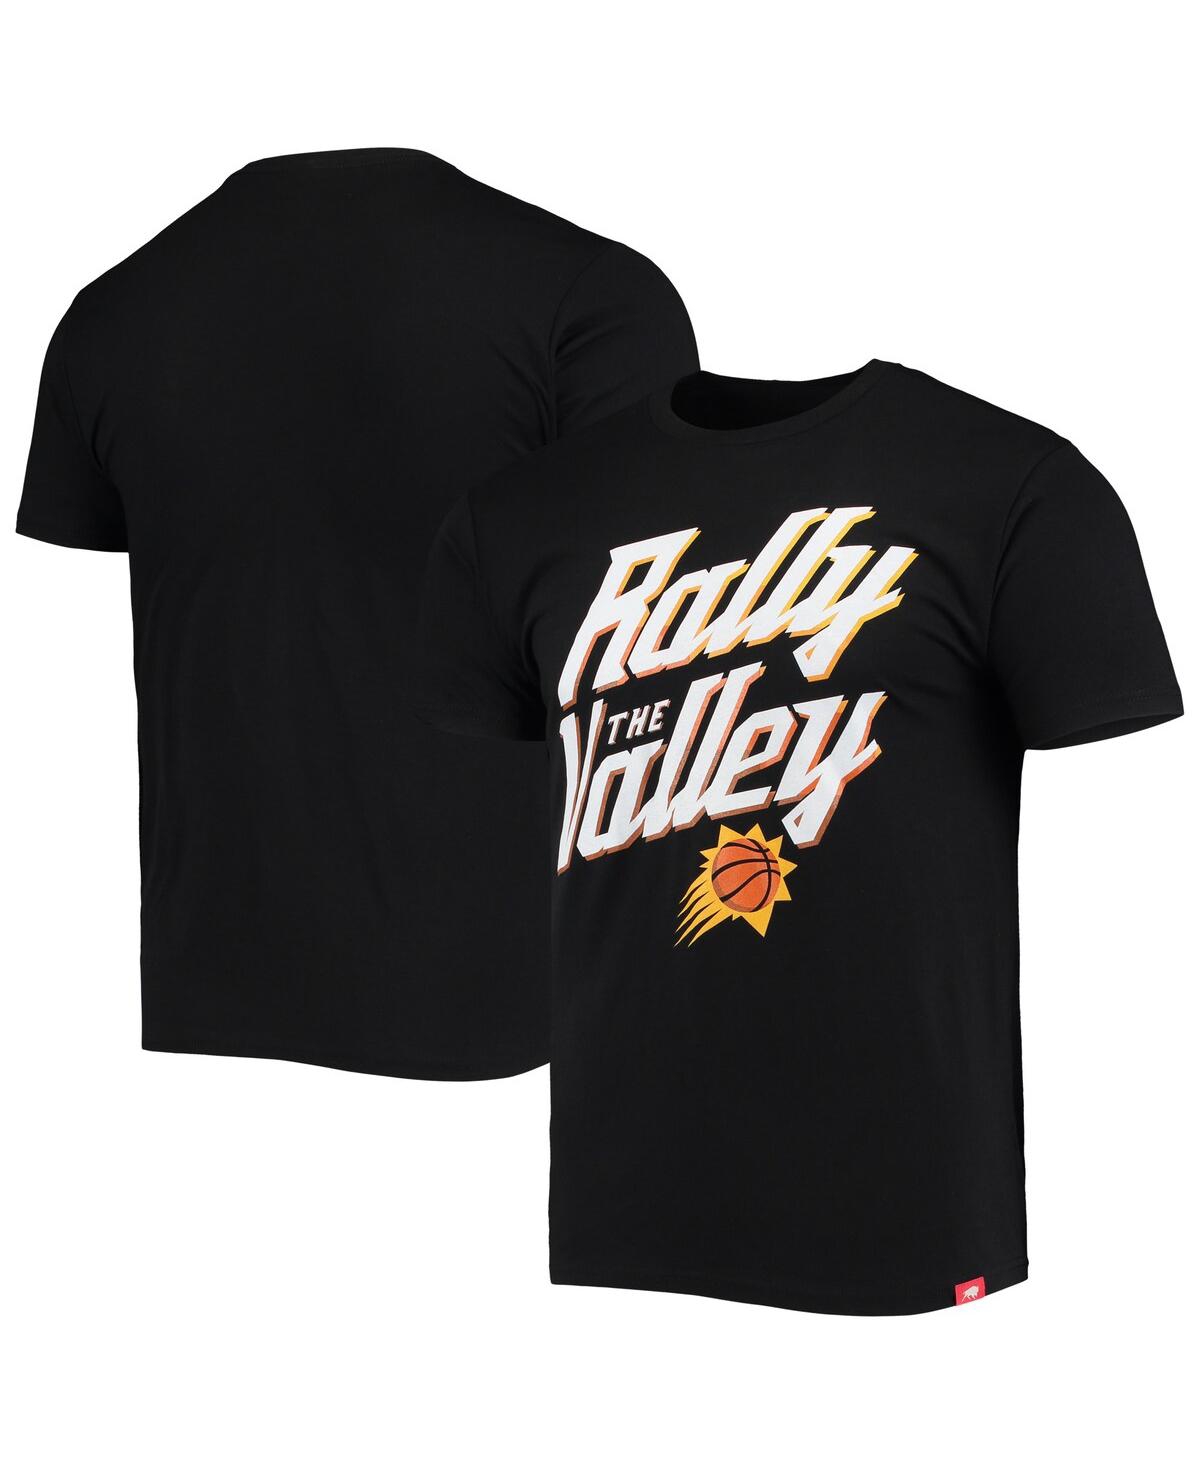 Unisex Sportiqe Black Phoenix Suns Rally The Valley Tri-Blend Comfy T-shirt - Black